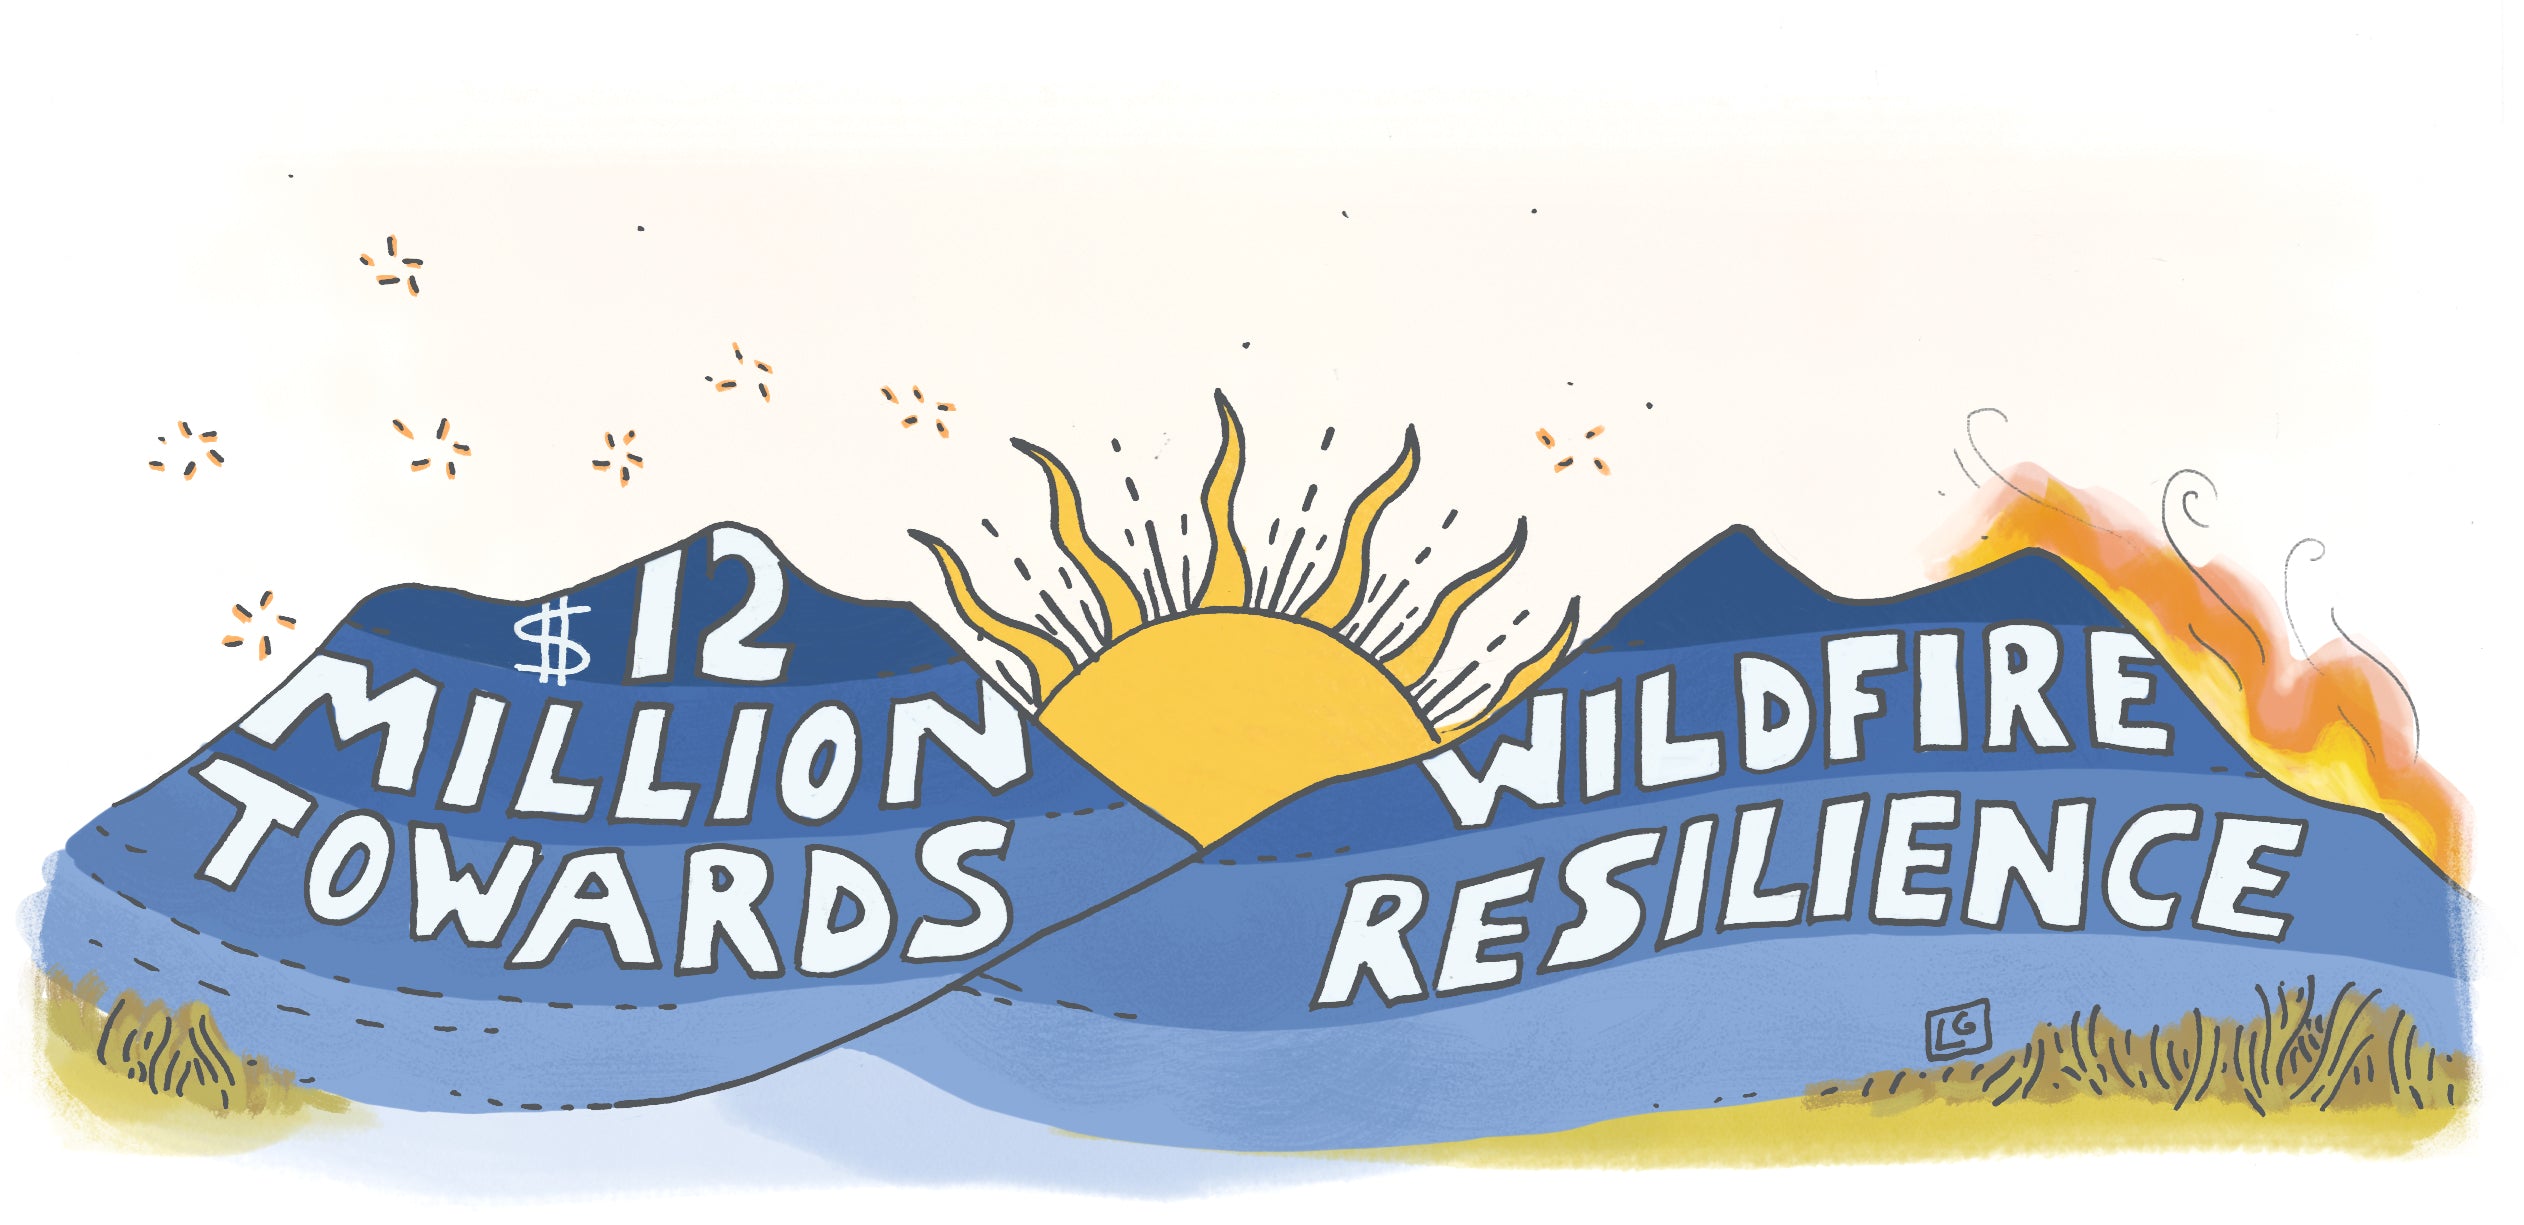 $12 Million Towards Wildfire Resilience